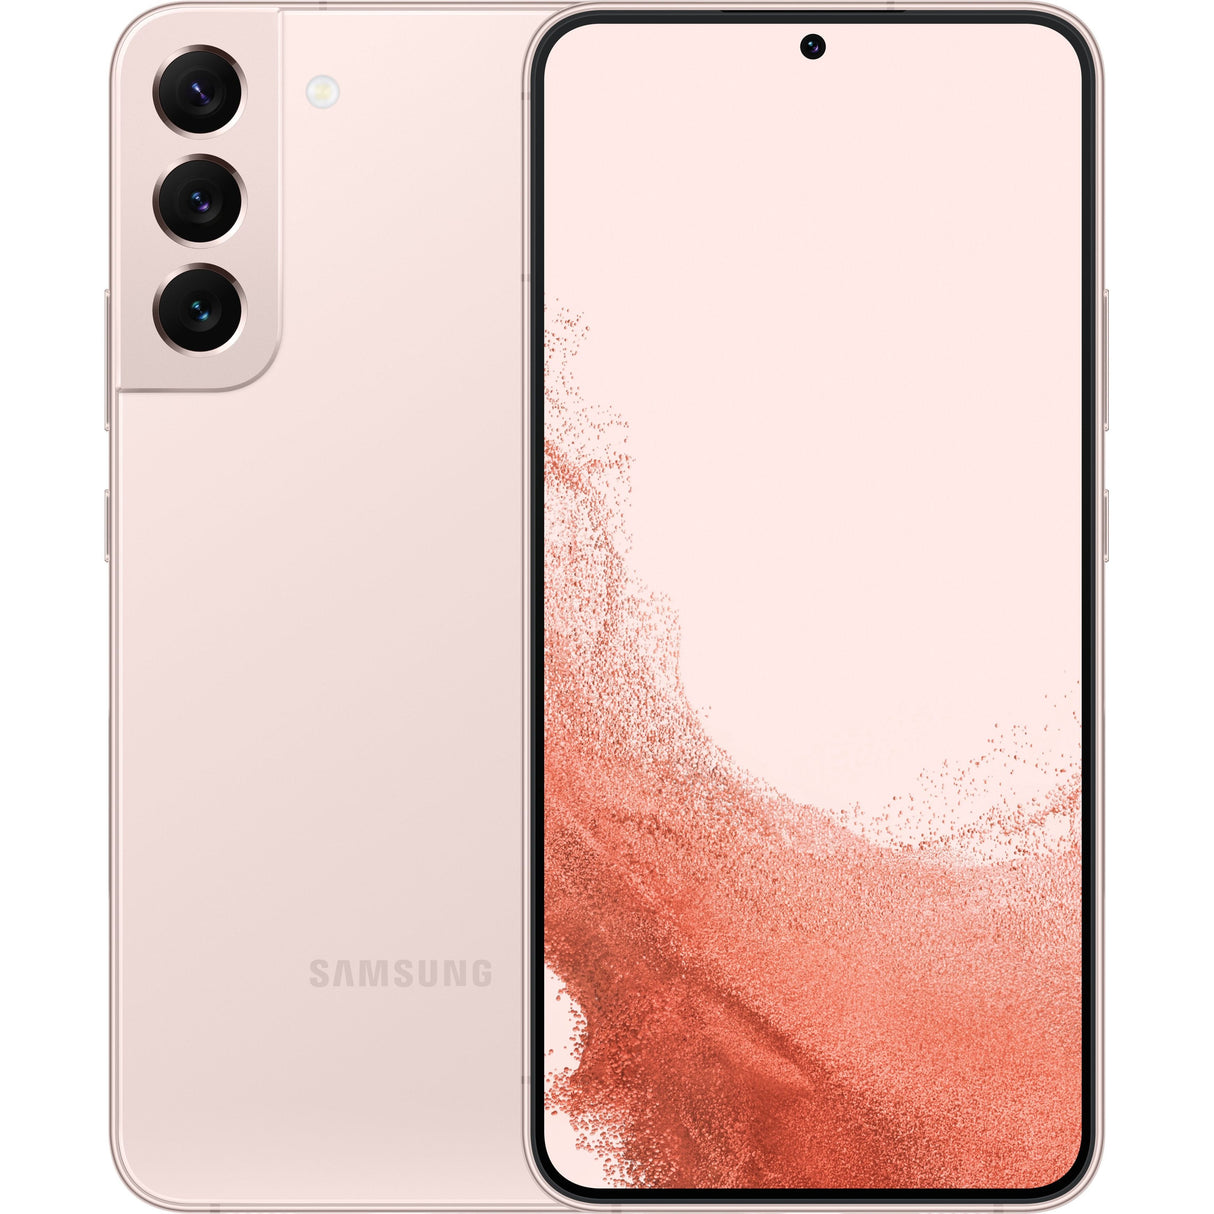 Samsung Galaxy S22 - 128GB - Pink Gold - US Cellular